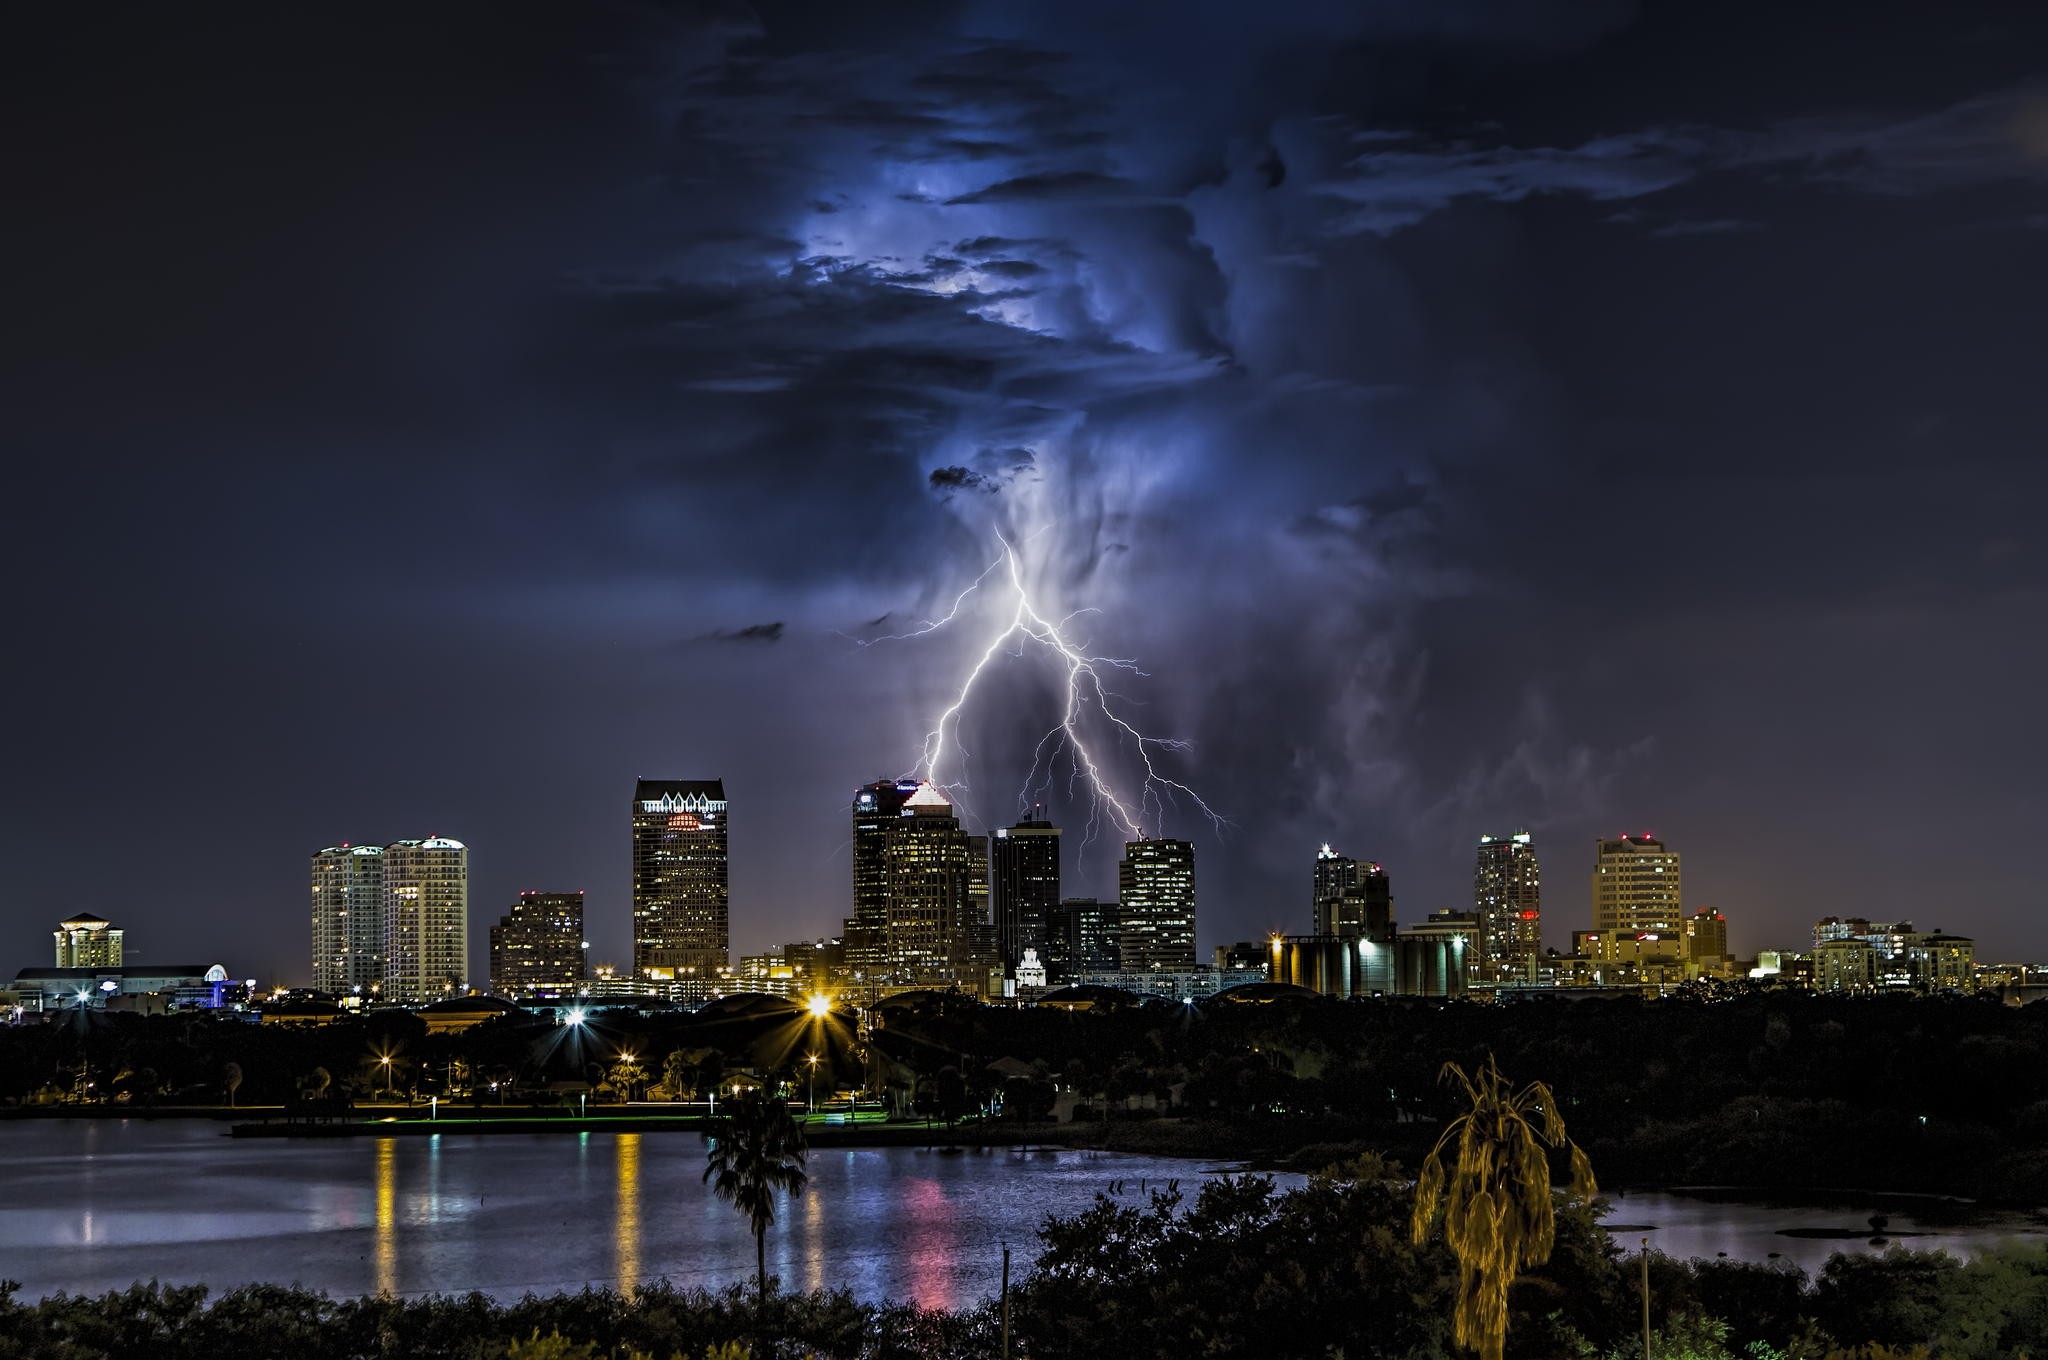 General 2048x1360 Tampa Florida USA city cityscape lightning clouds night storm nature city lights digital art